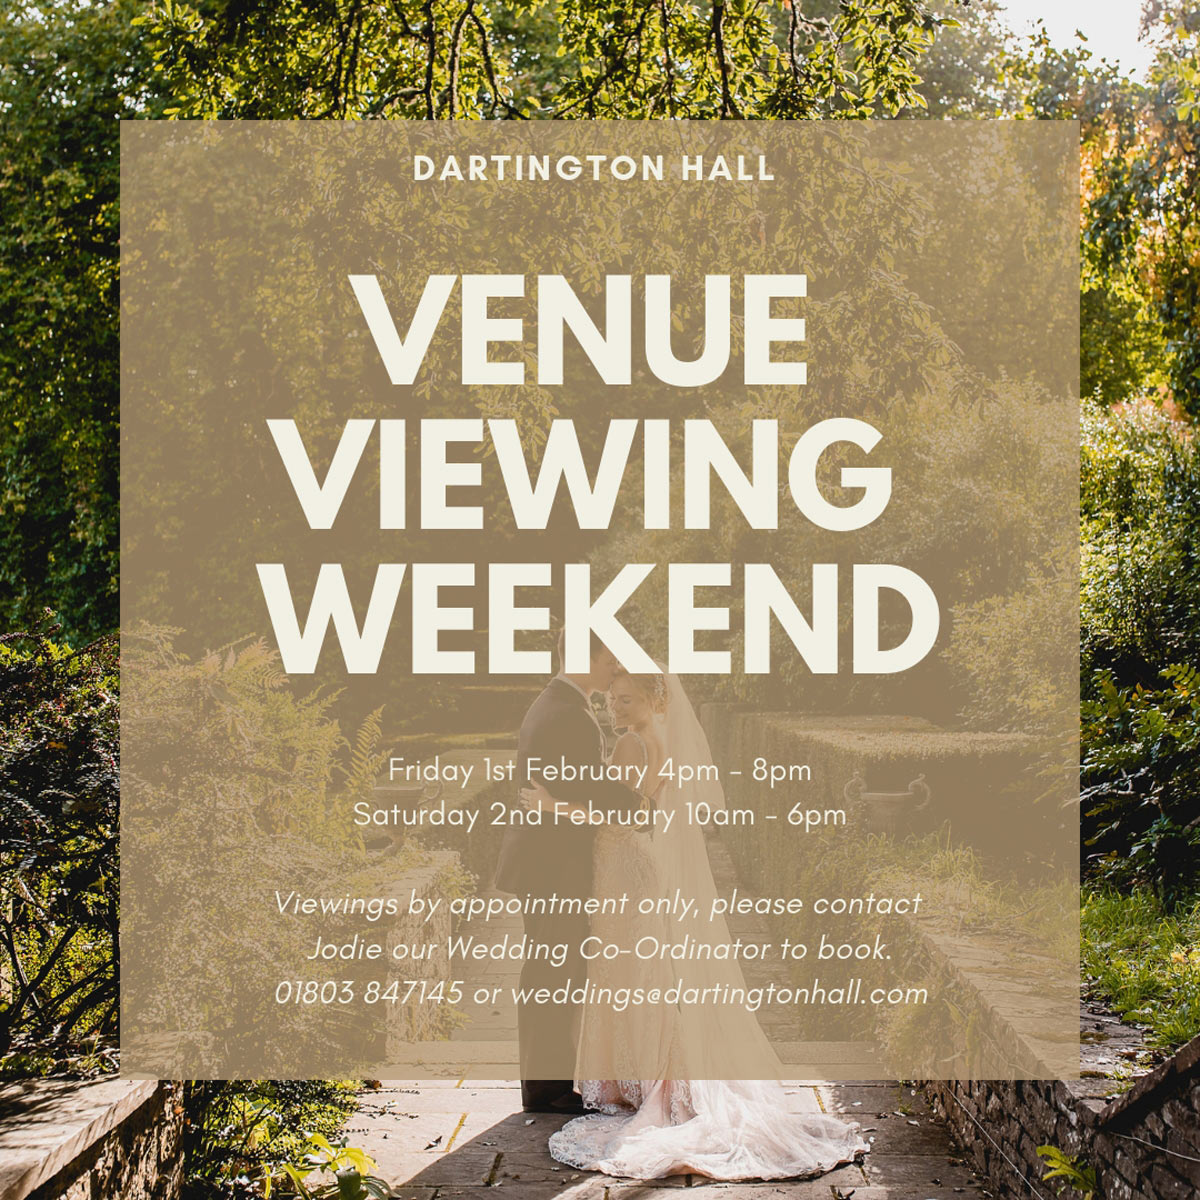 Venue Viewing Weekend at Dartington Hall